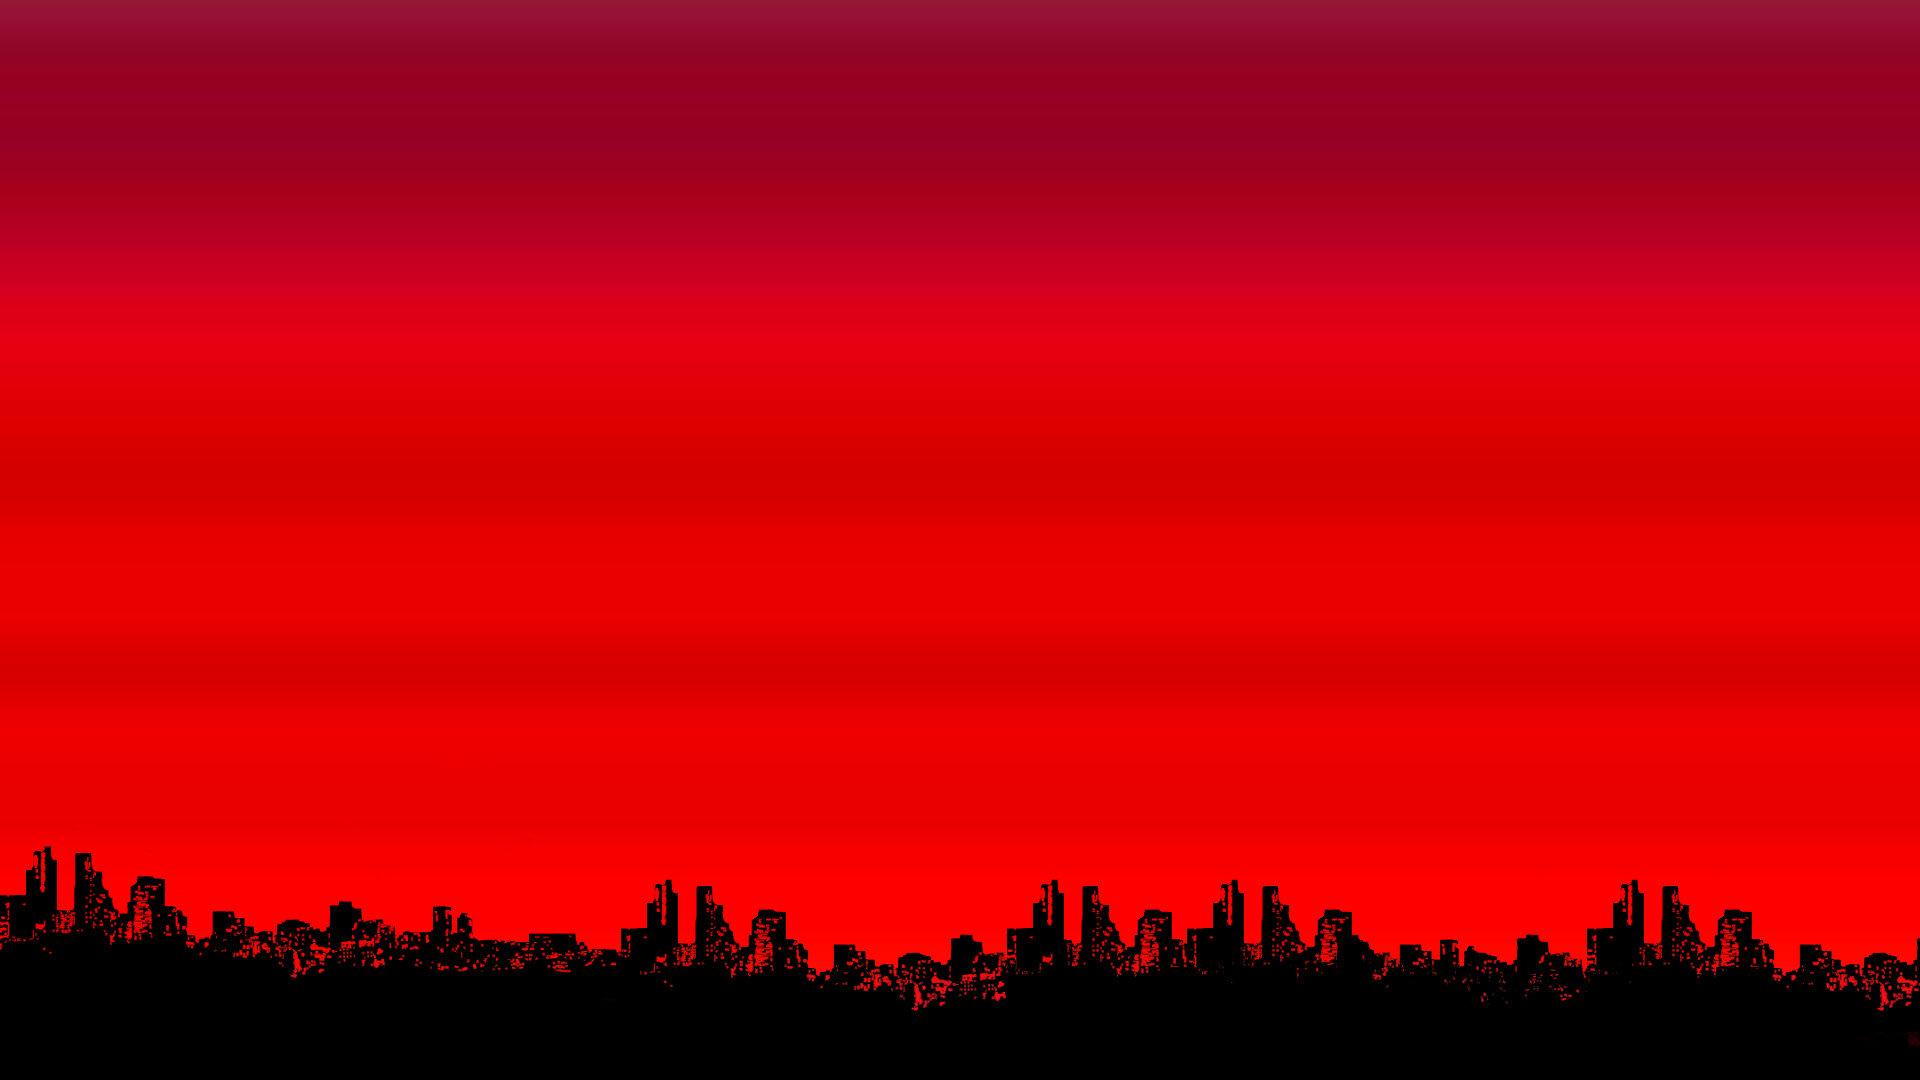 Red wallpaper 1920x1080 Full HD (1080p) desktop background